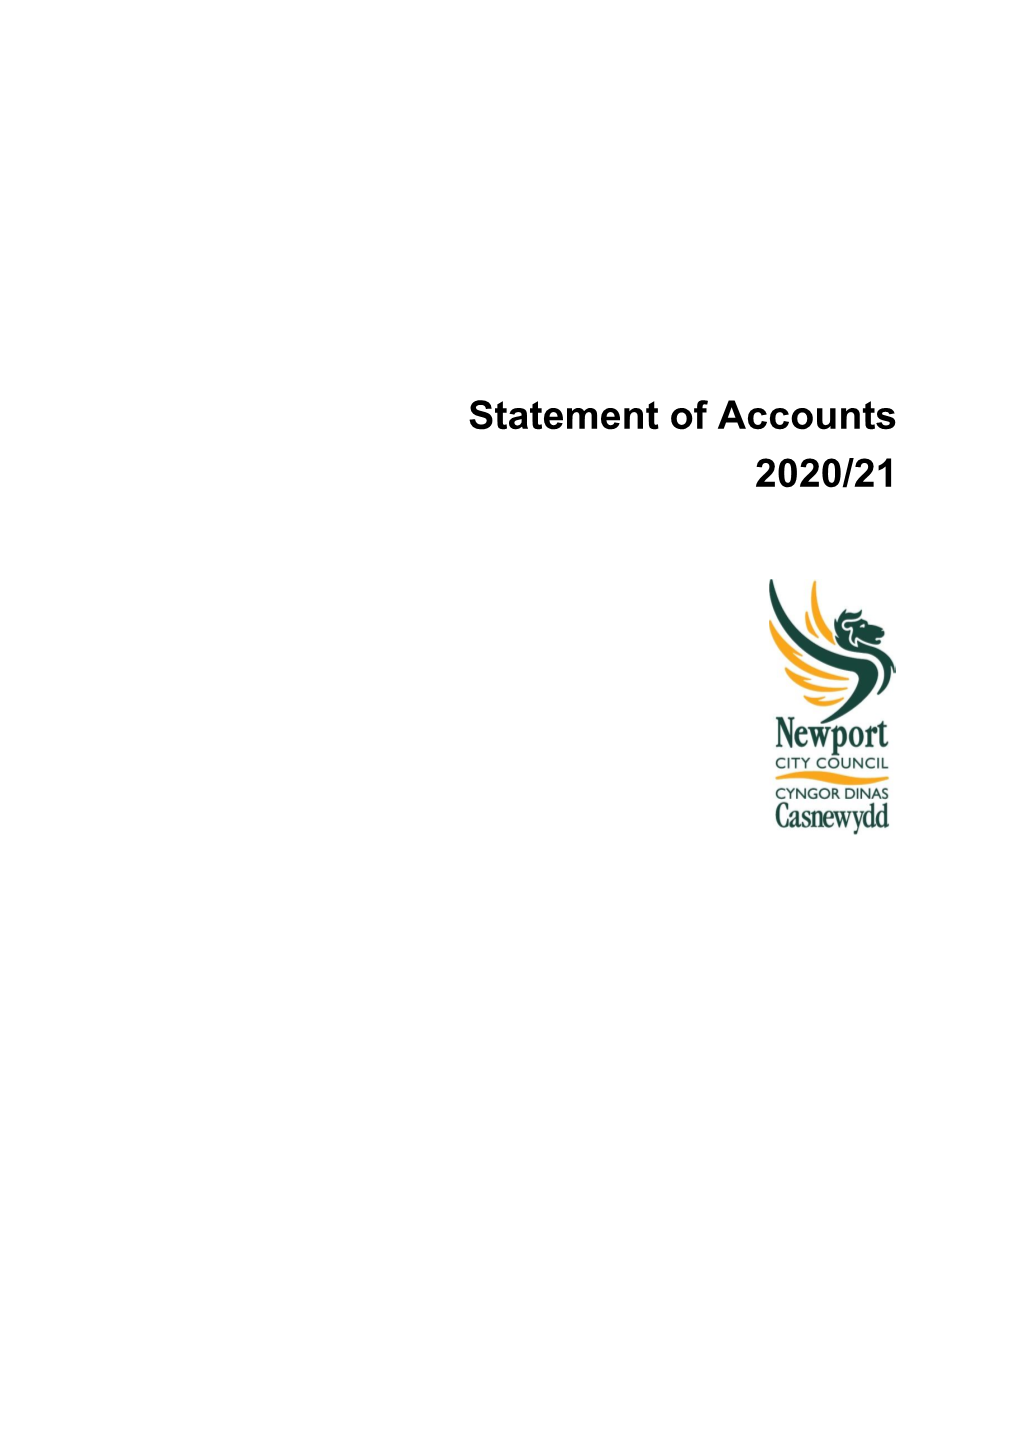 Statement of Accounts 2020/21